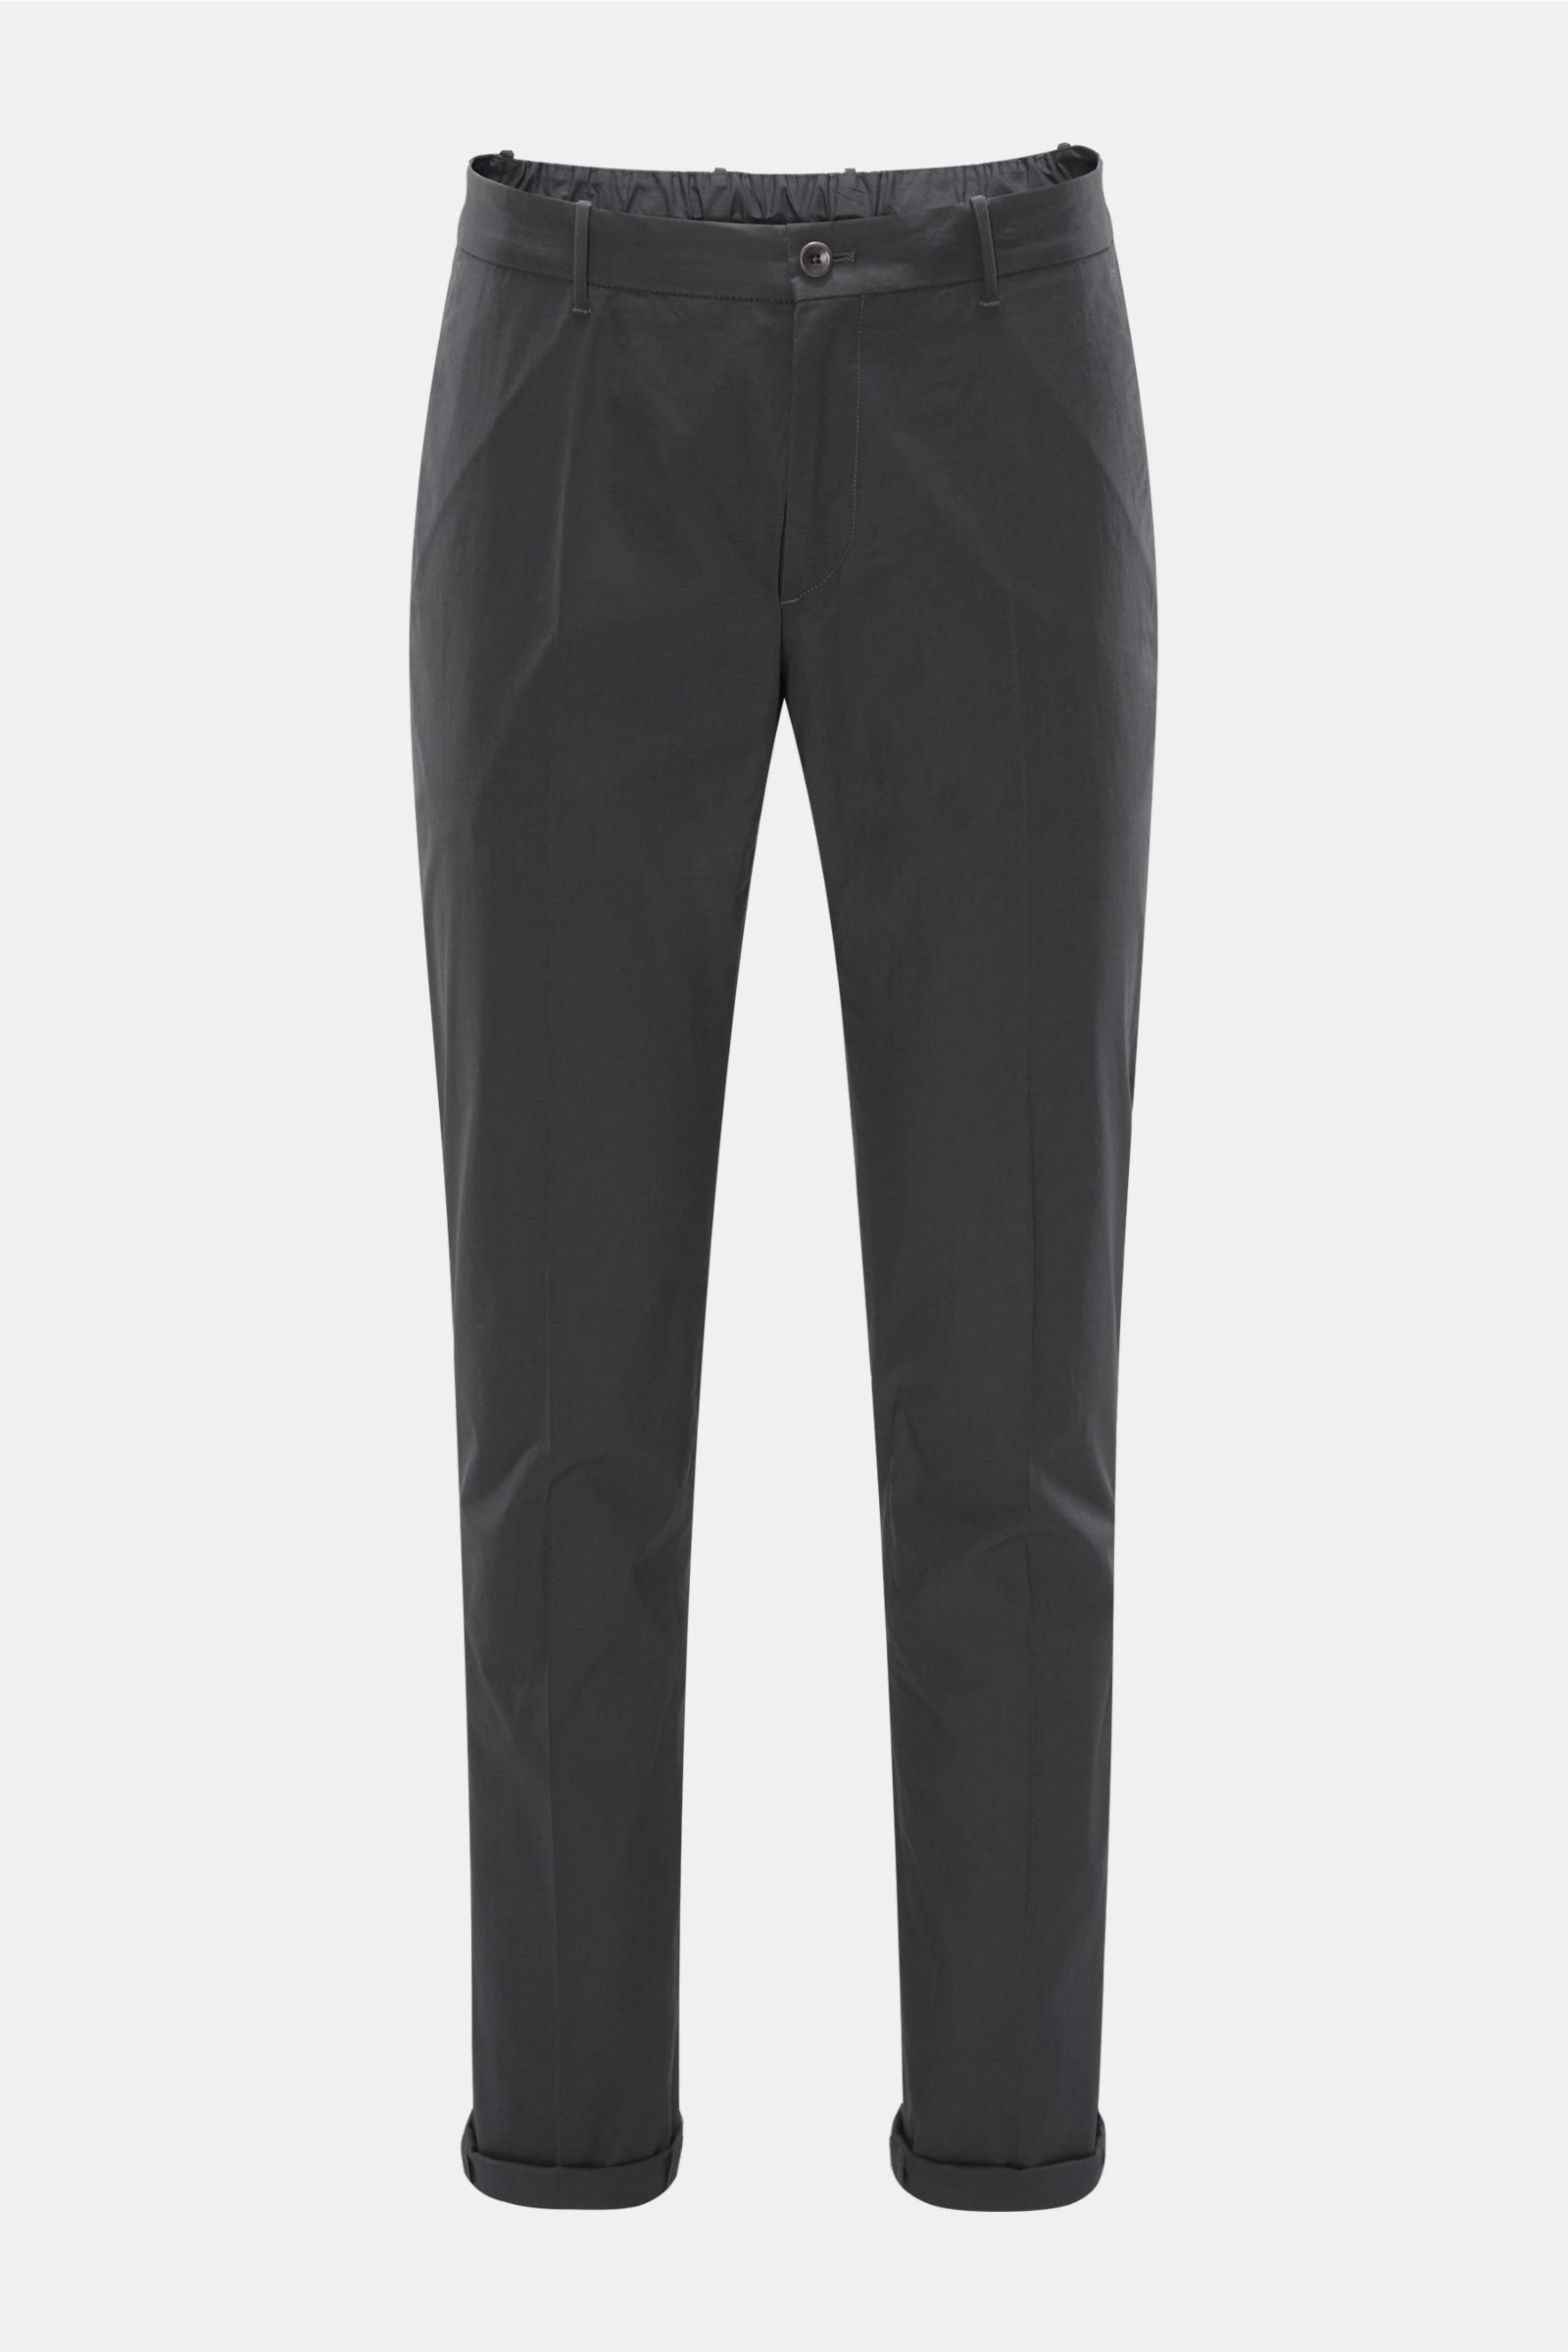 Cotton jogger pants dark grey